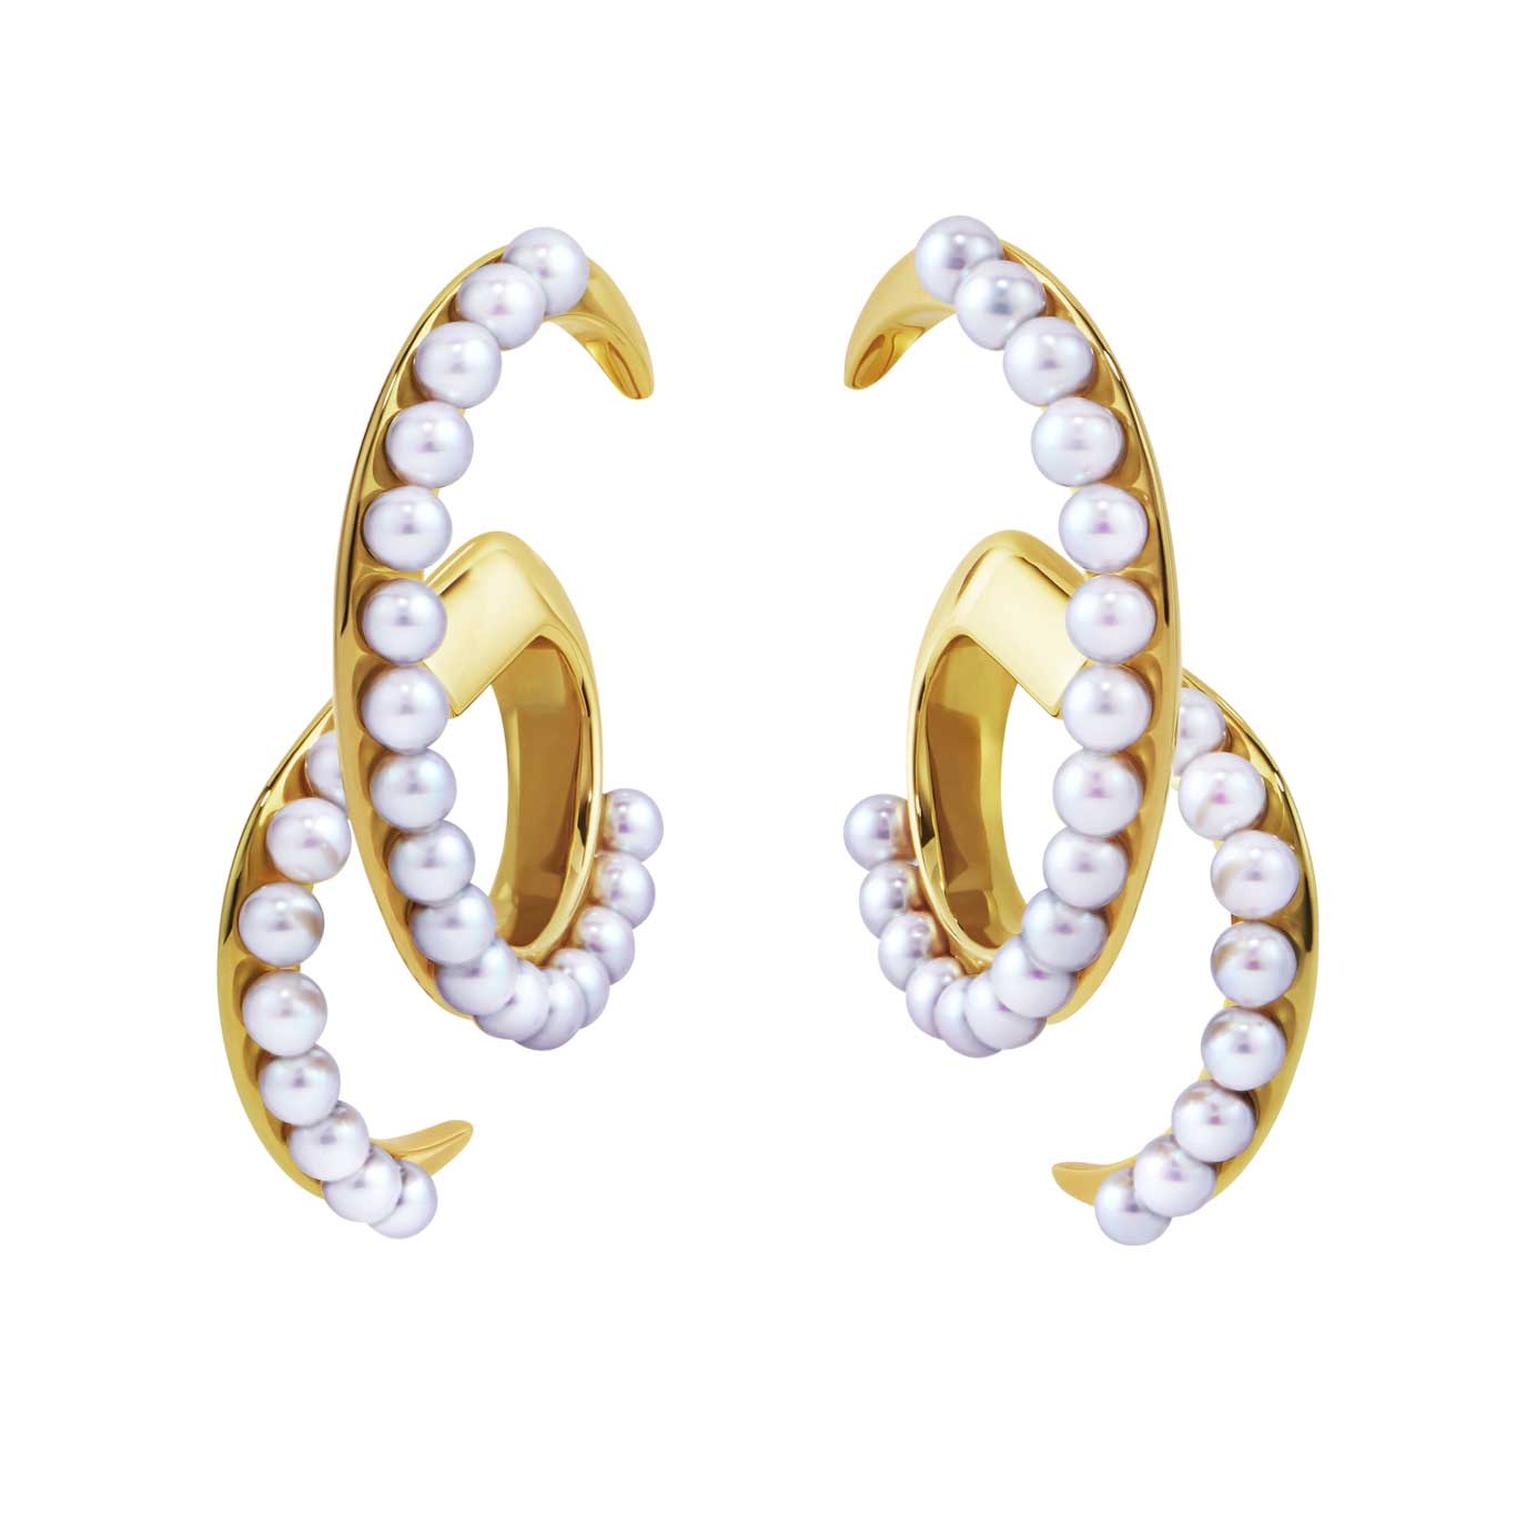 Tasaki Atelier Surge Akoya pearl and gold earrings